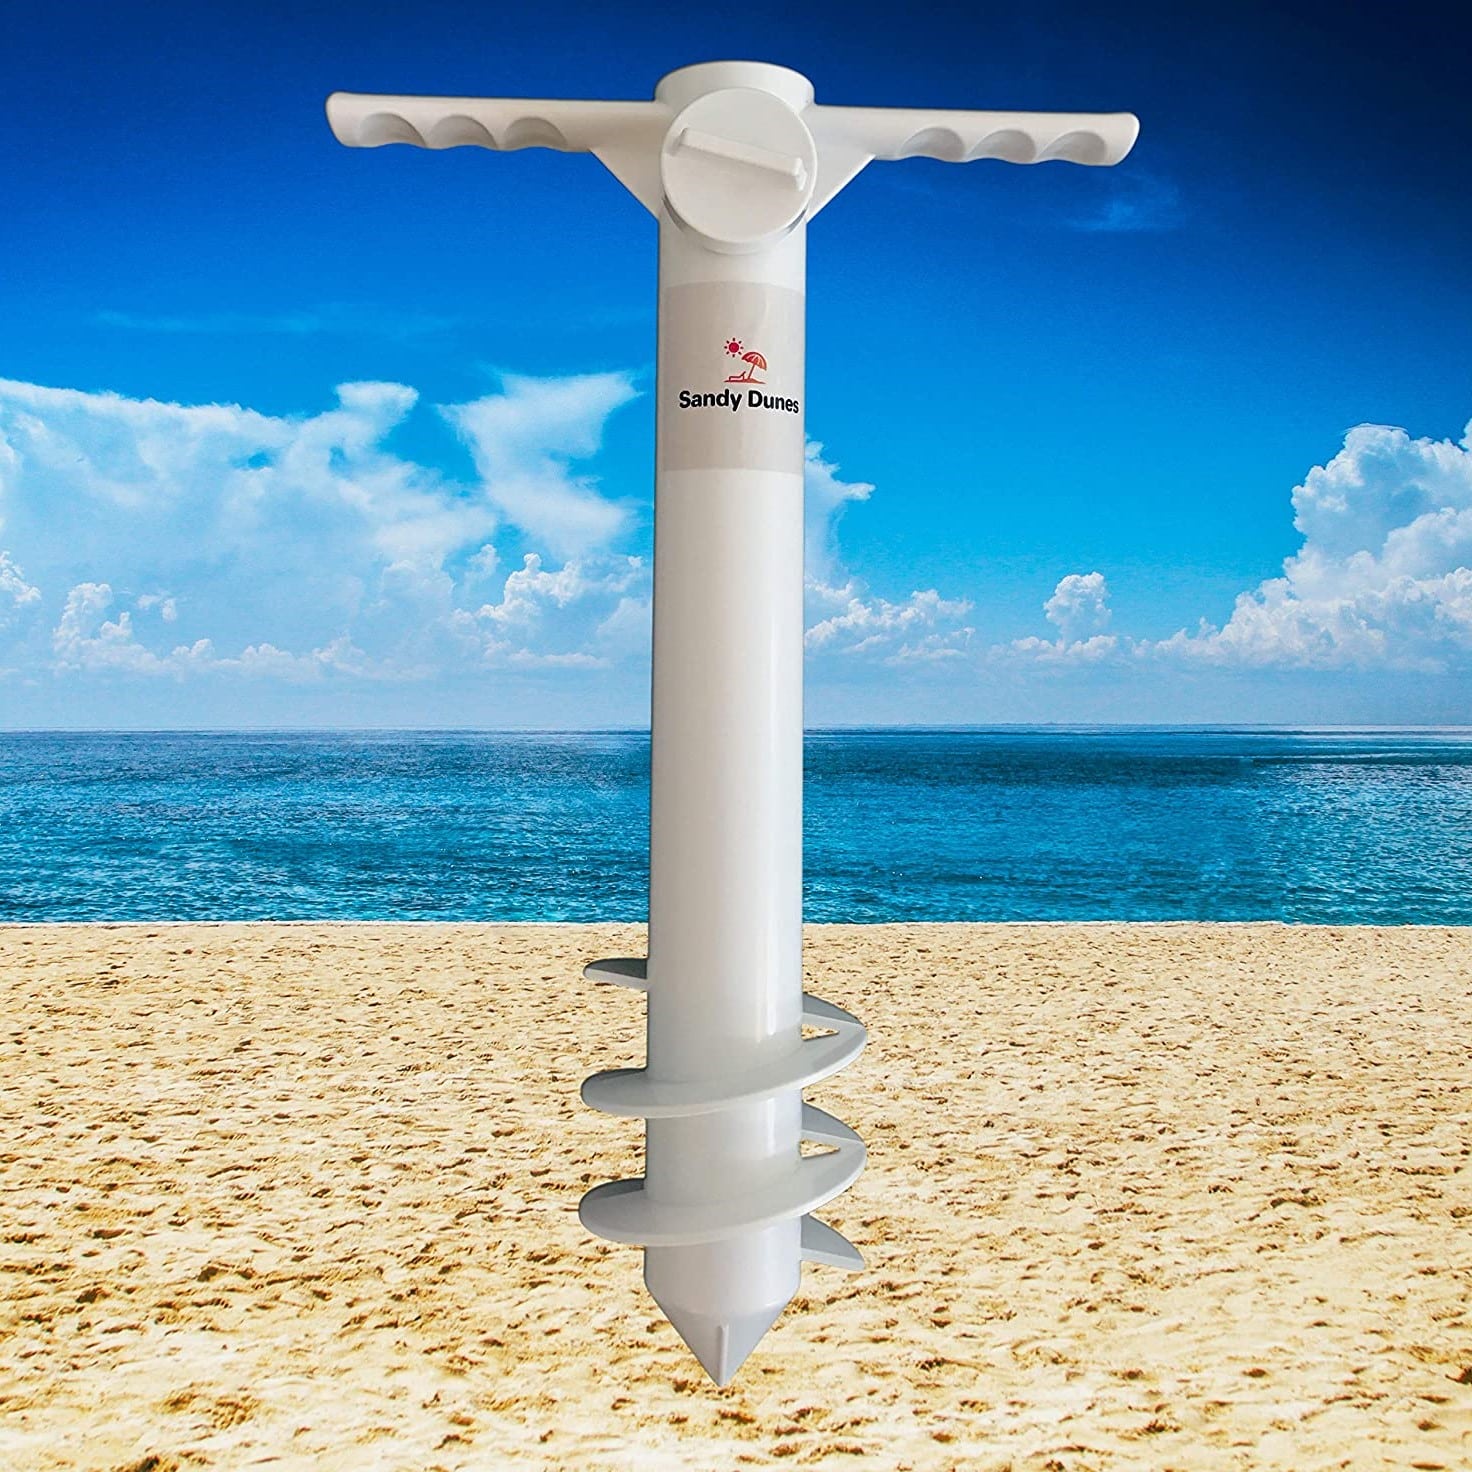 Anchors for beach umbrellas